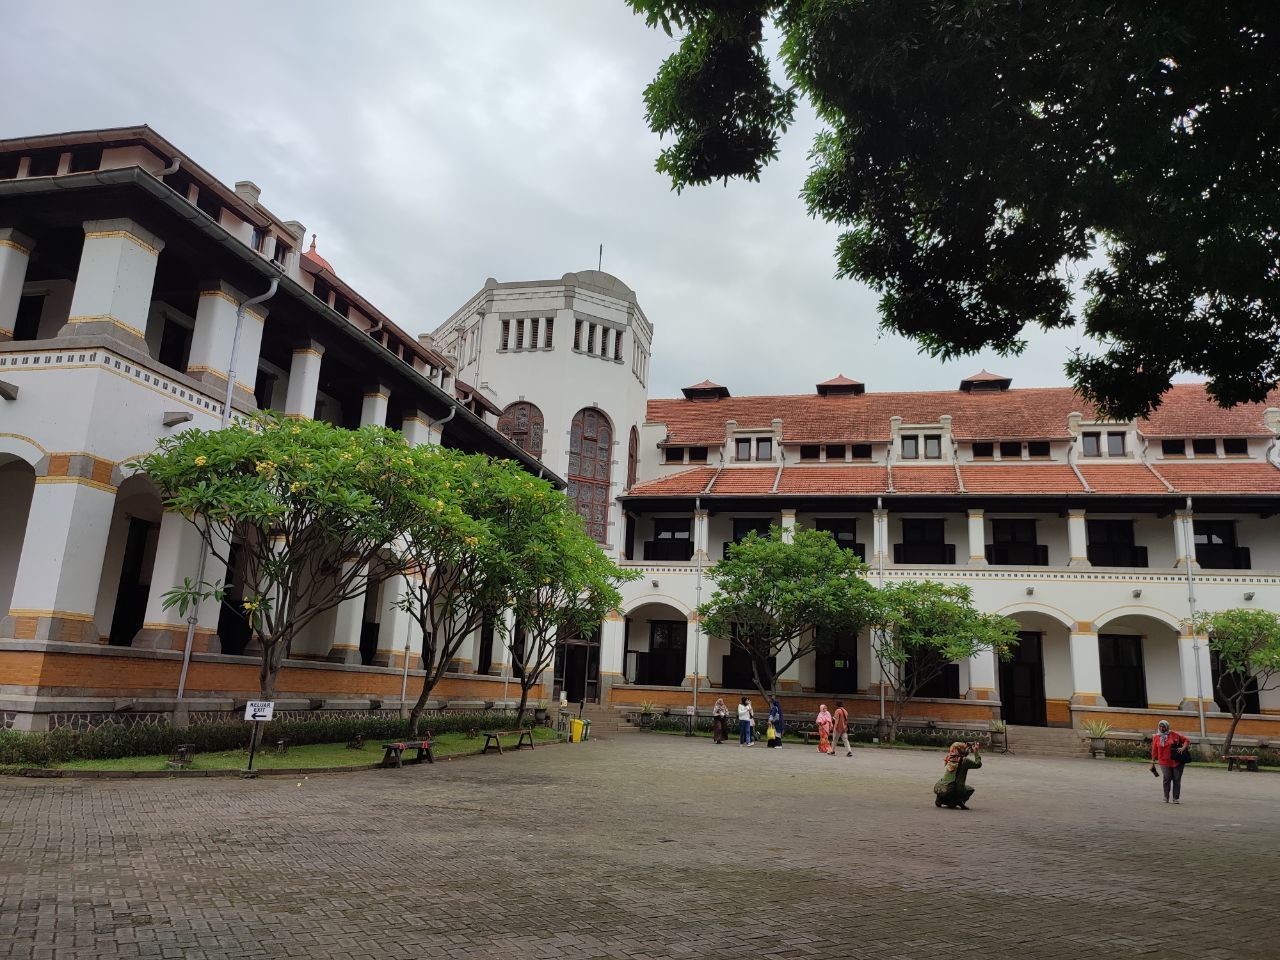 Sisi lain dari bangunan Lawang Sewu, gedung bersejarah di Semarang. 